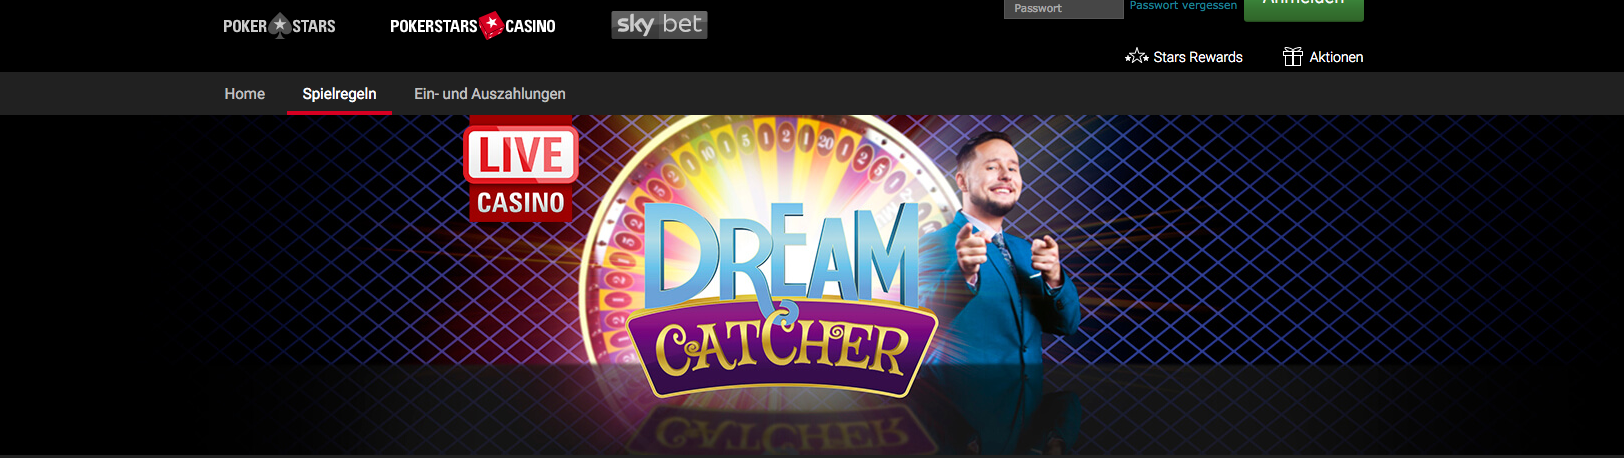 Casino Online Dreamcatcher Trick